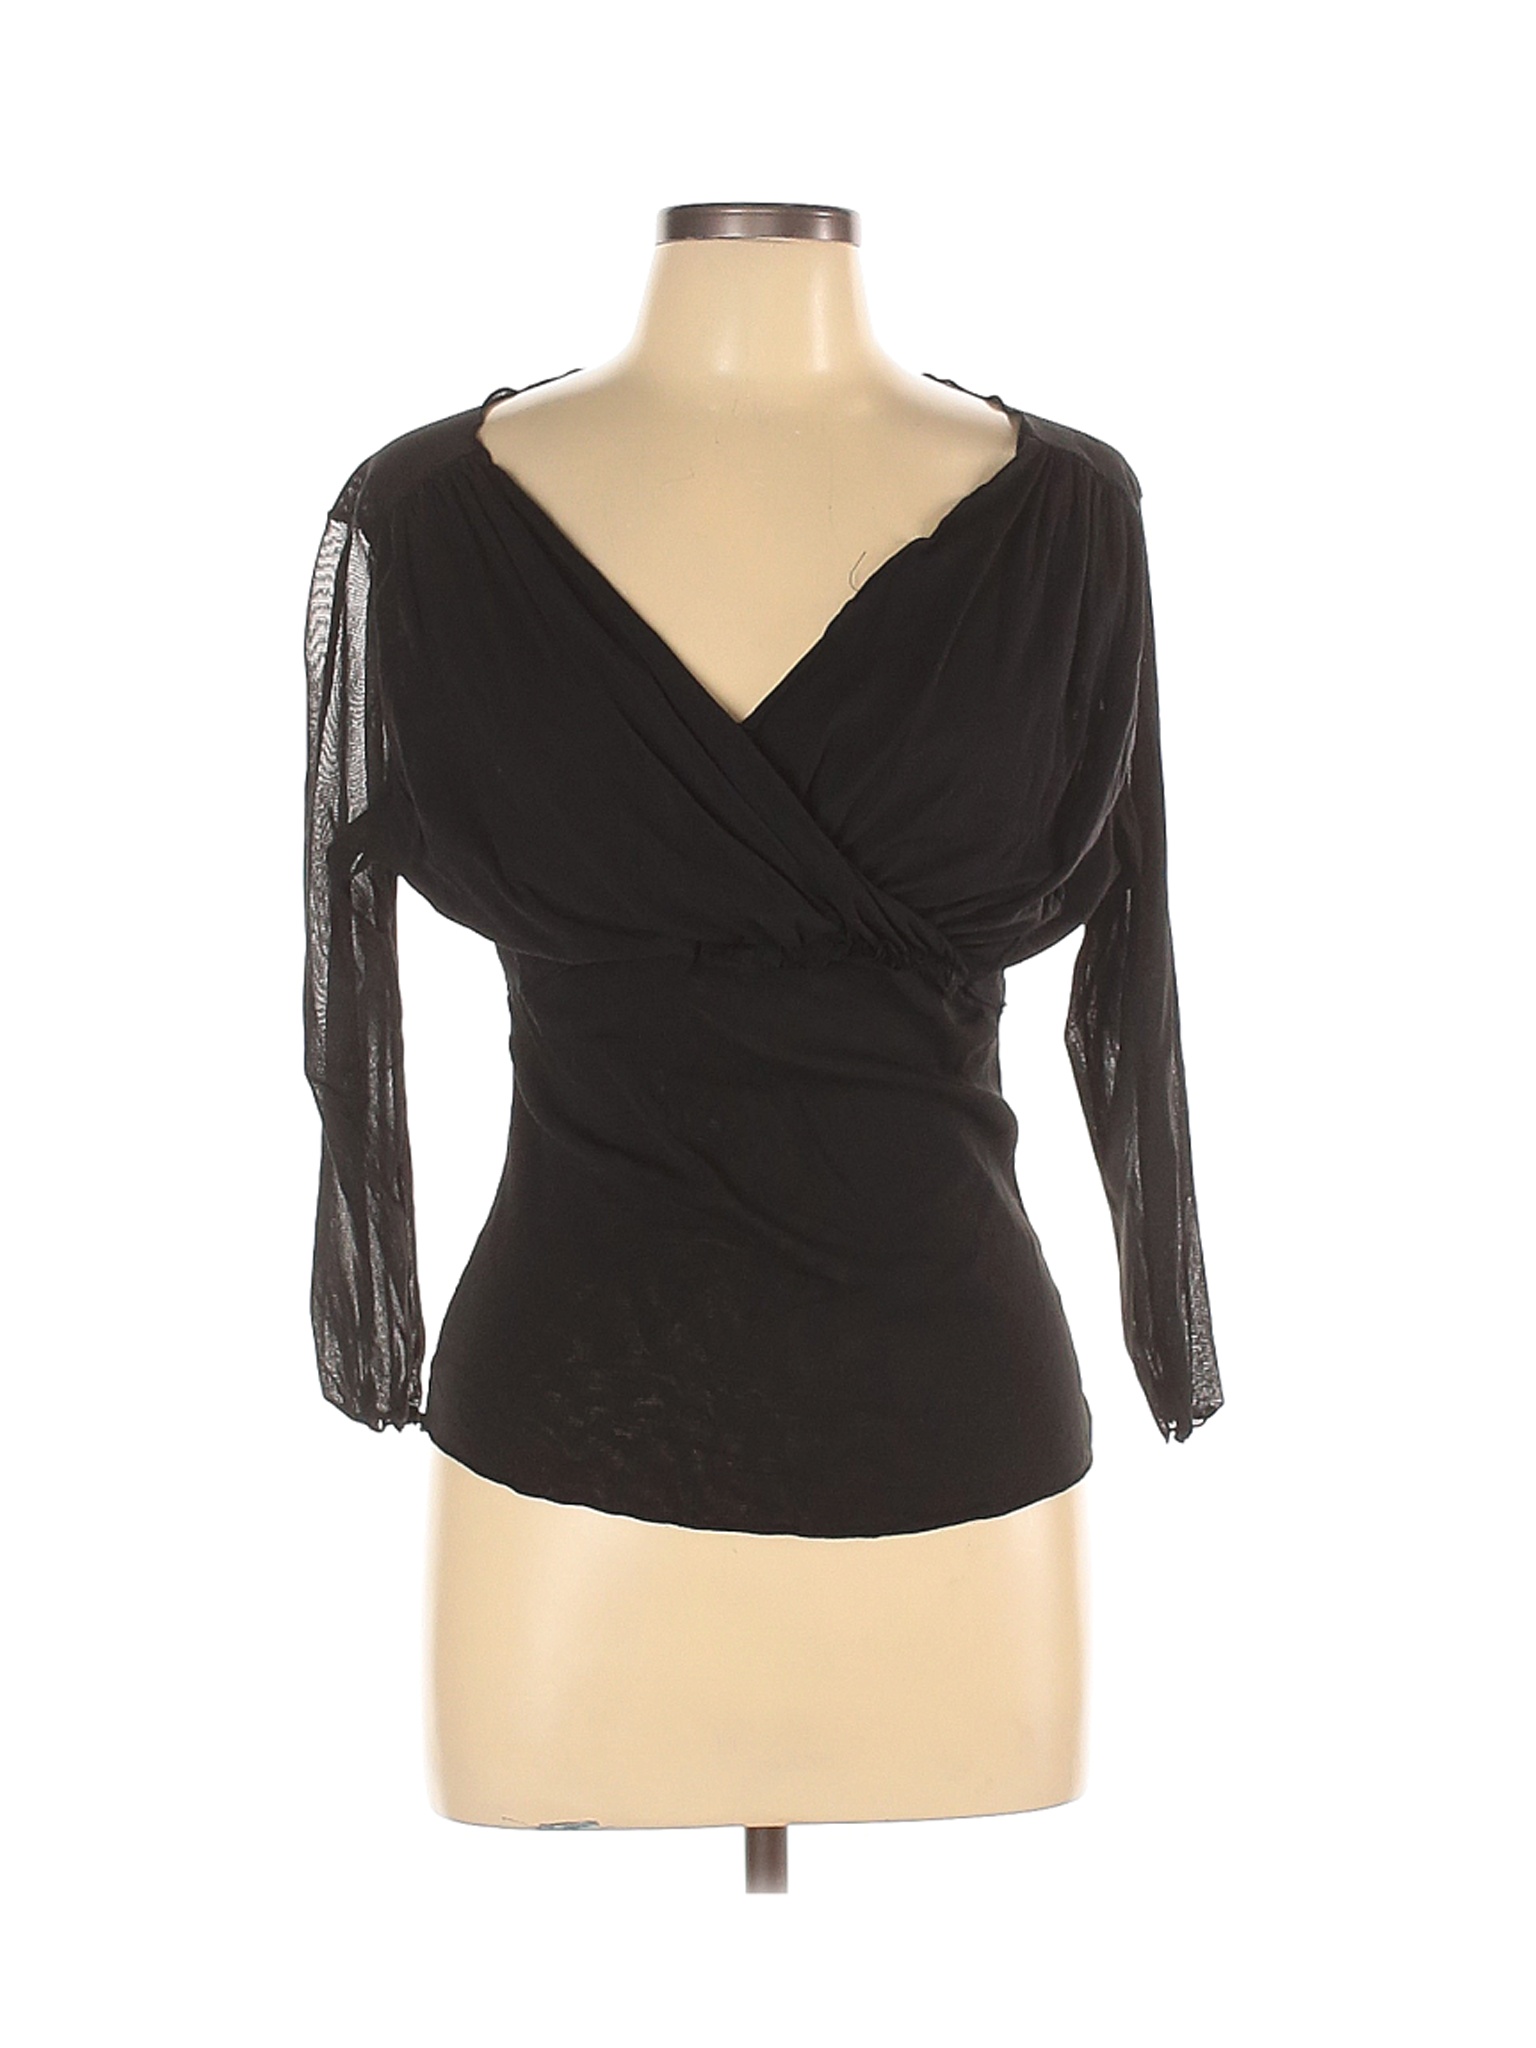 Max Studio Women Black Long Sleeve Blouse L | eBay